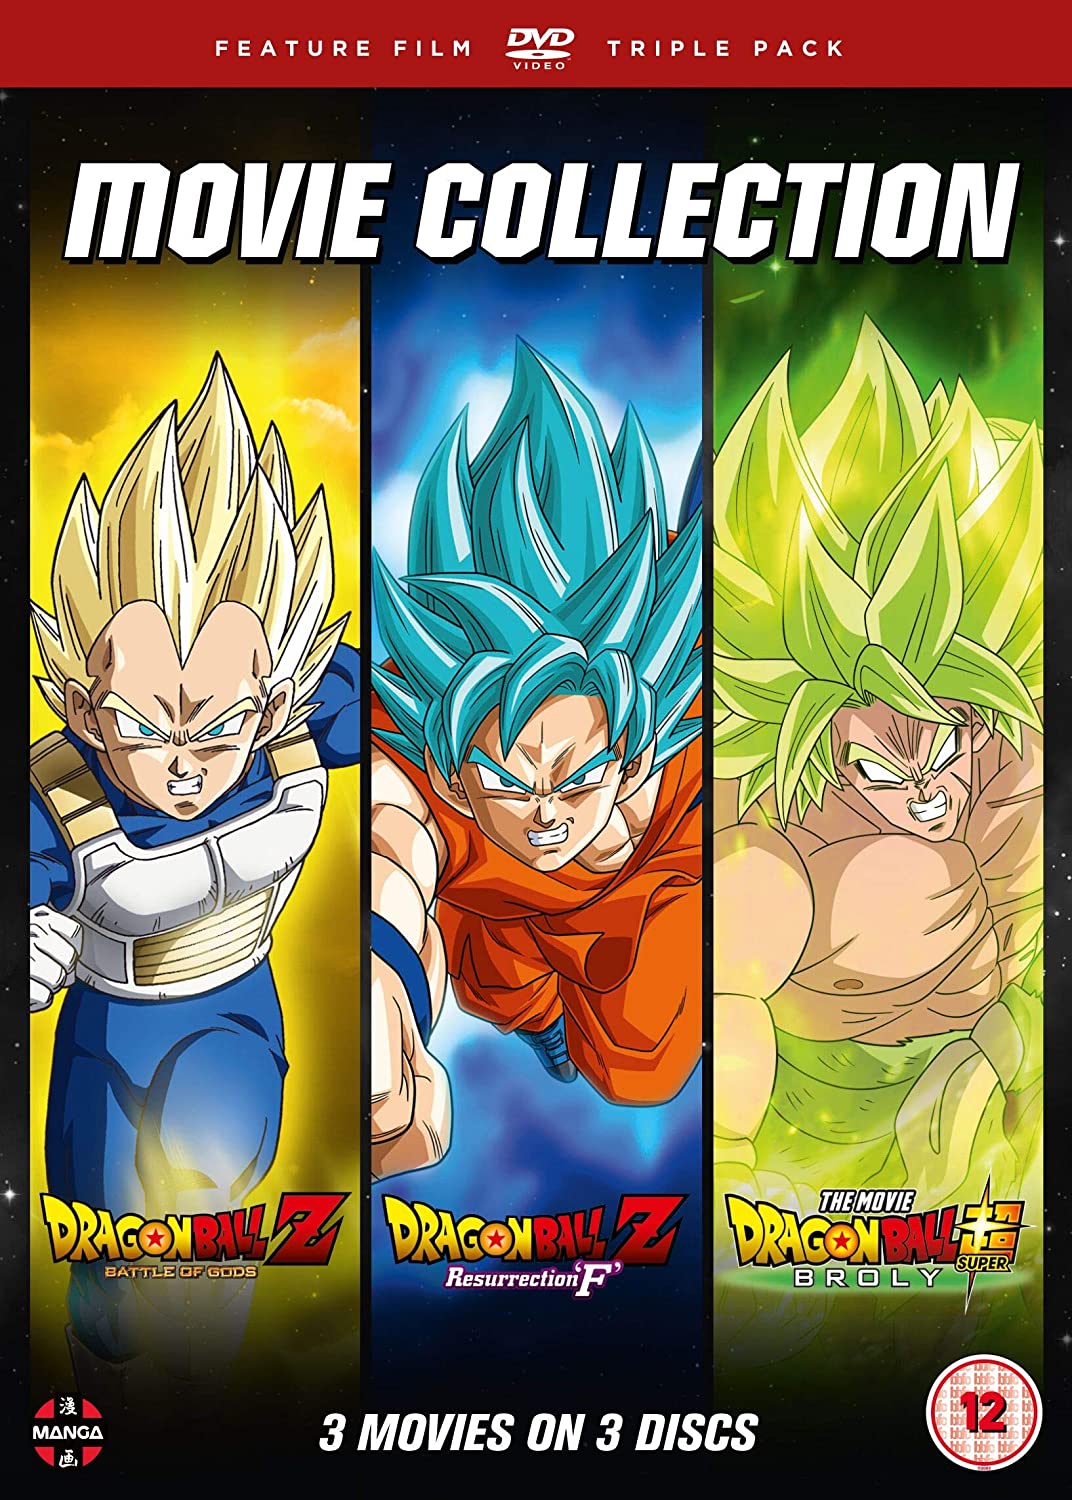 Dragon Ball Movie Trilogy (Battle Of Gods, Resurrection F , Broly) [DVD]